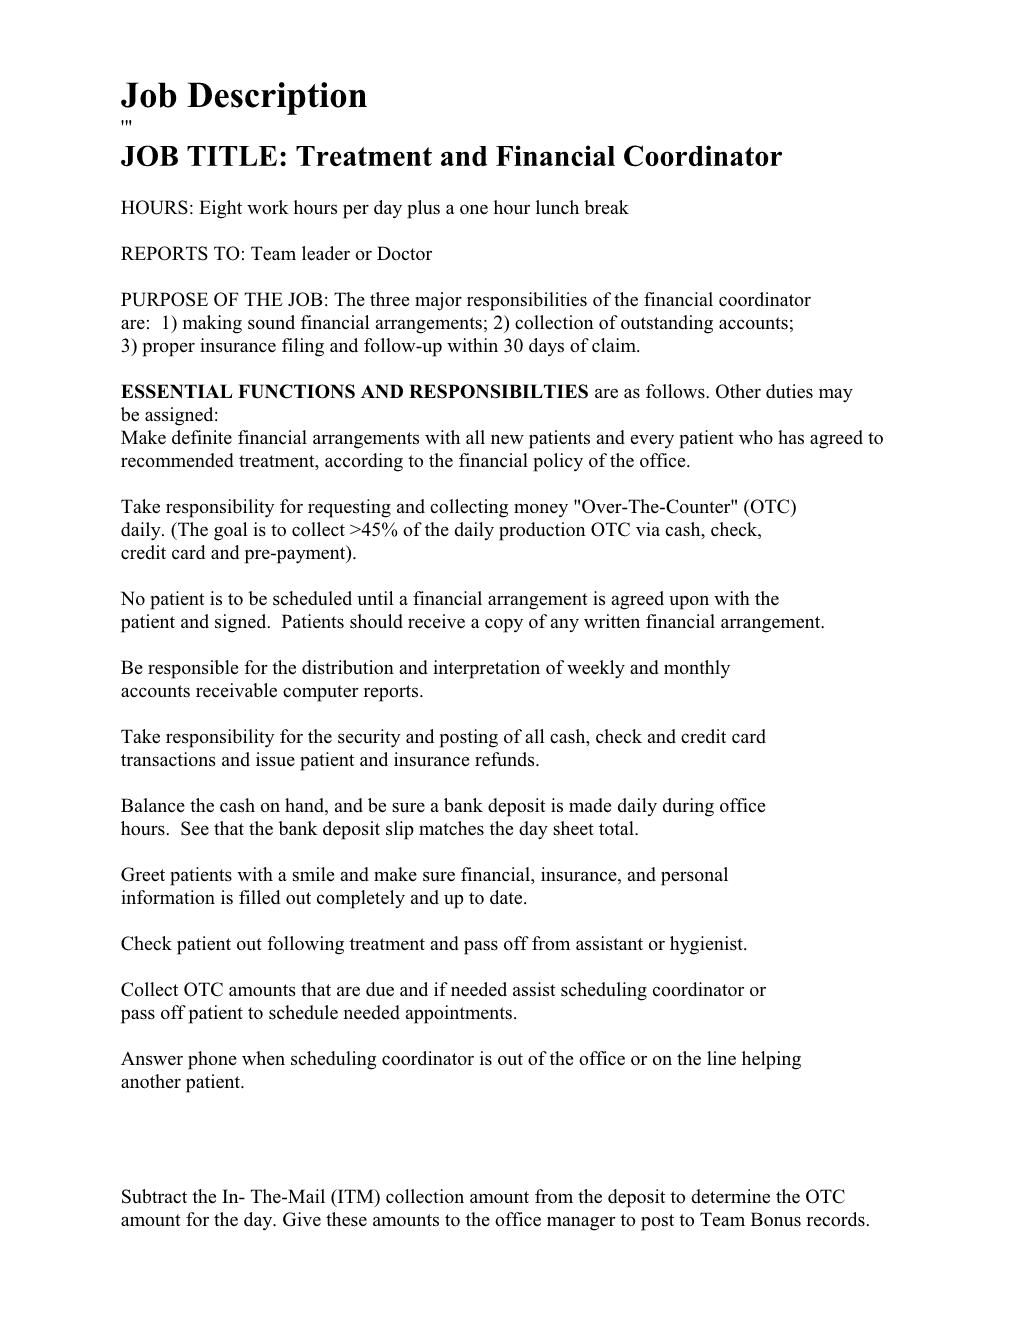 JOB TITLE: Treatment and Financial Coordinator